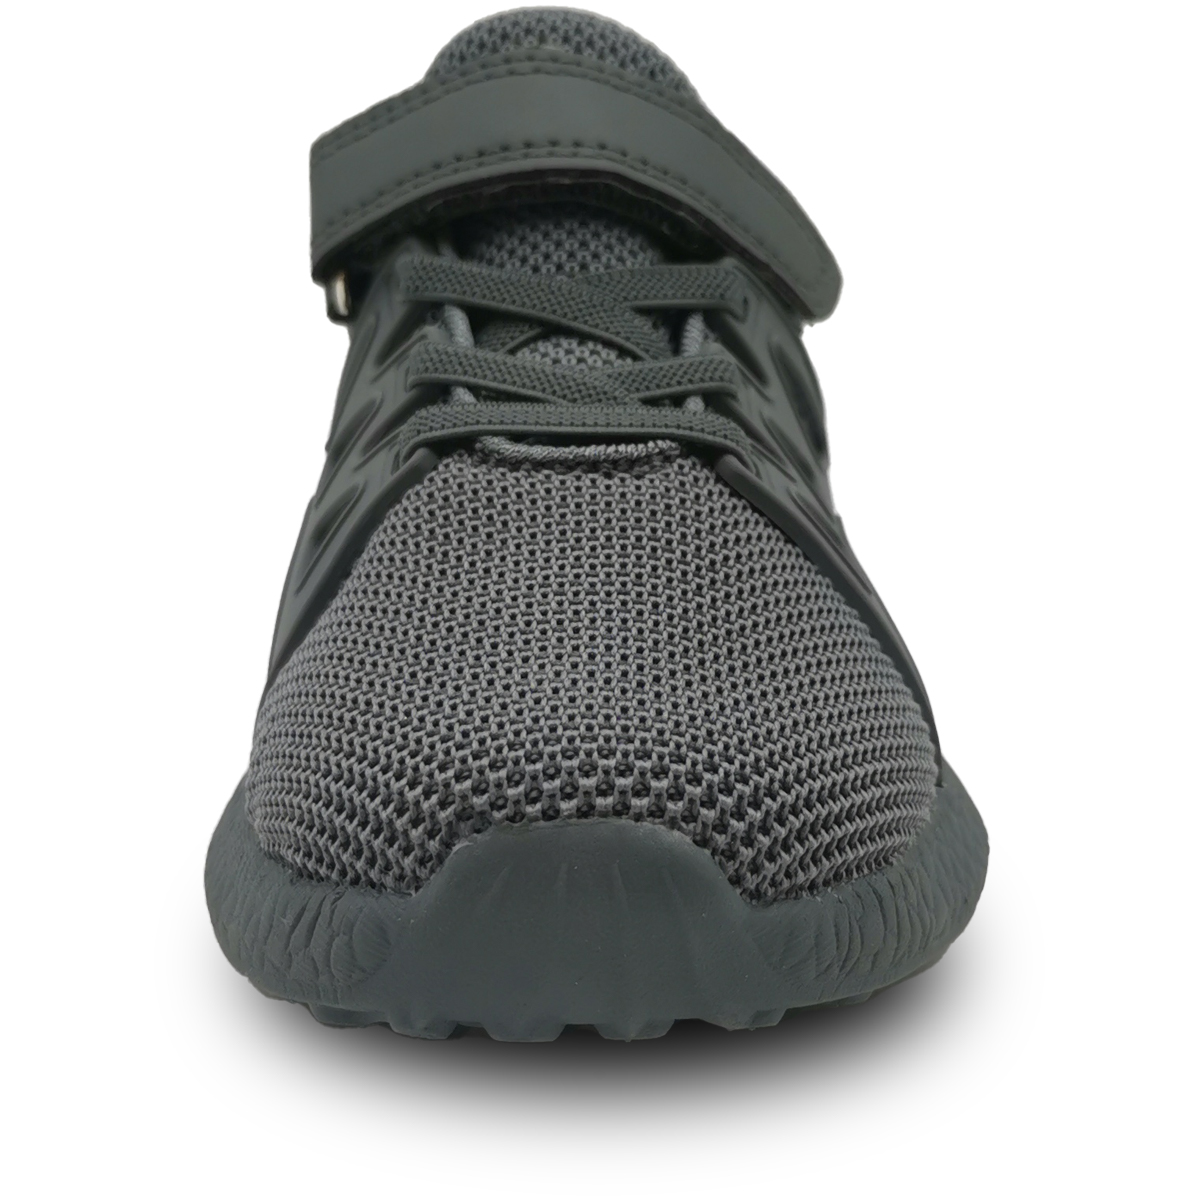 Stepedia Kids Tennis Shoes Boys Girls Lightweight Breathable Walking Running Sneakers Dark Grey, Size 1 - image 5 of 6